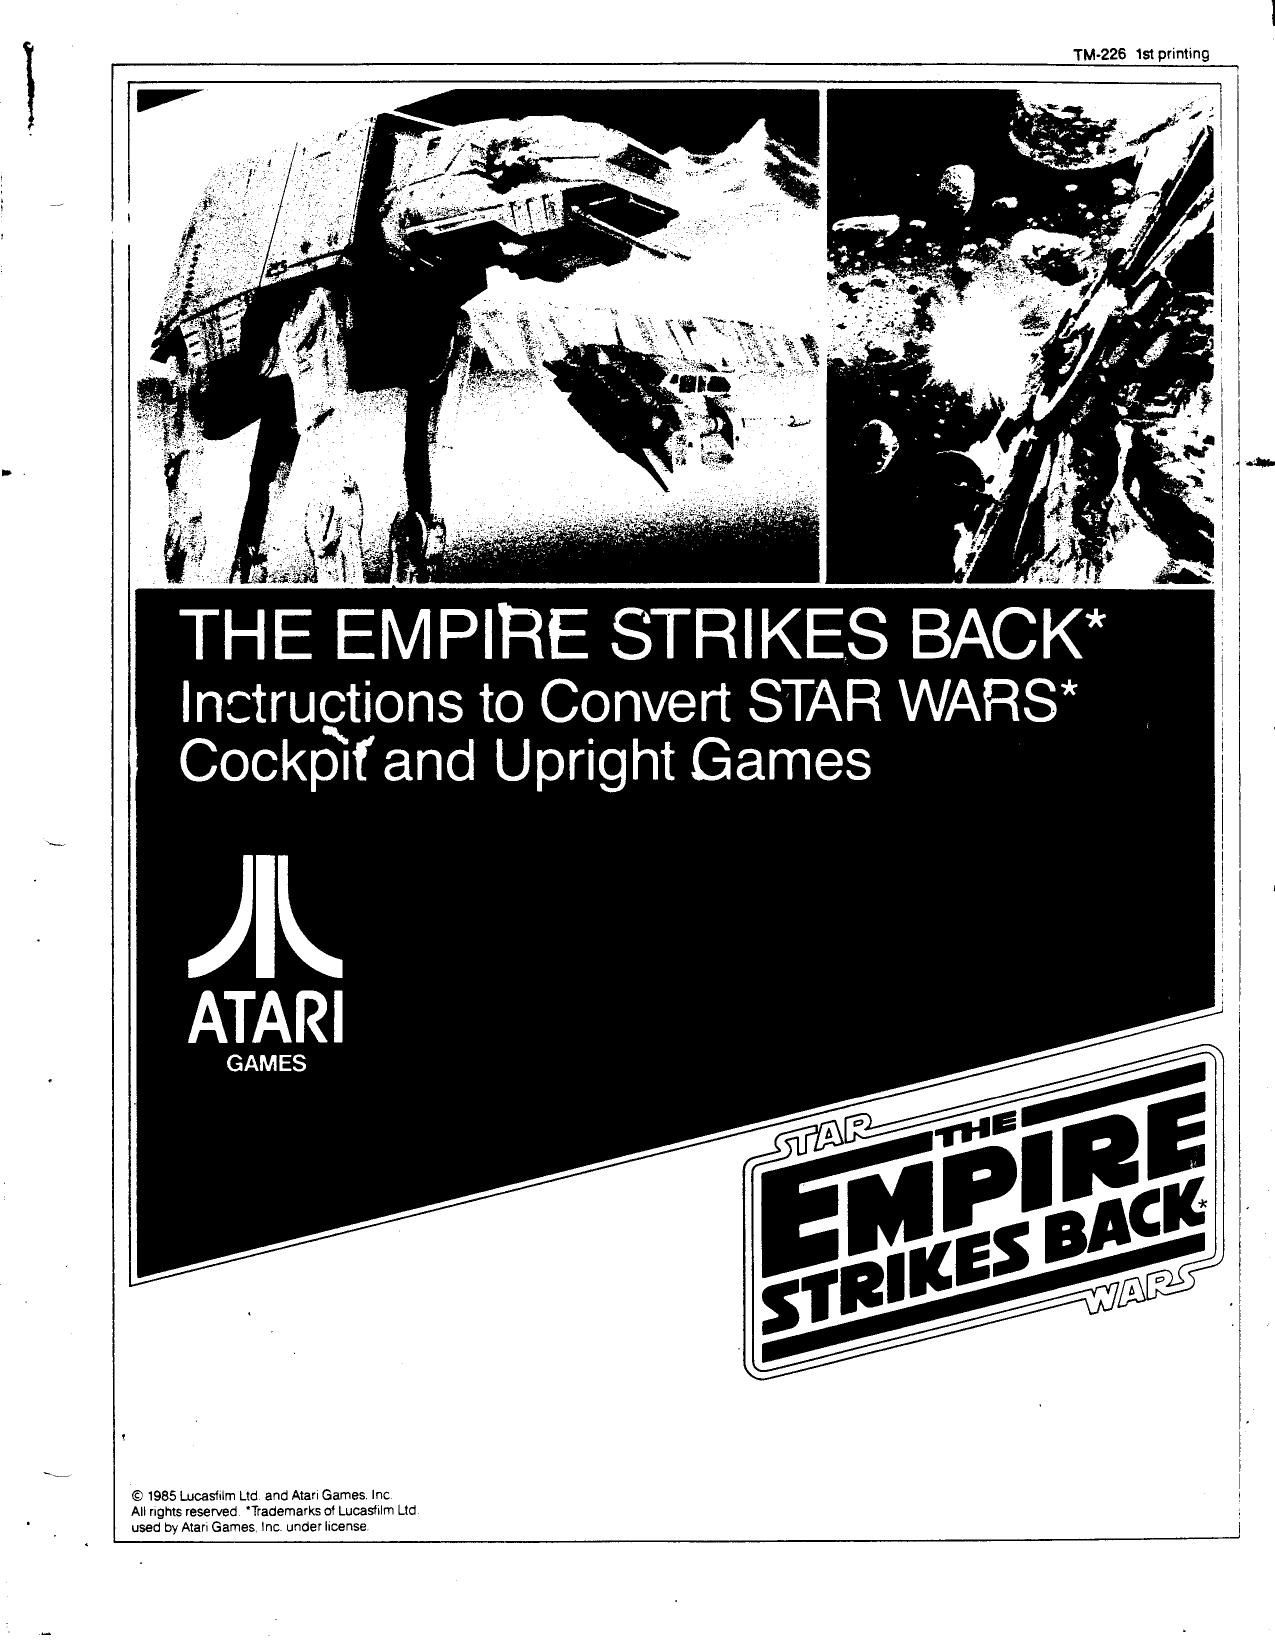 EmpireStrikesBack Manual